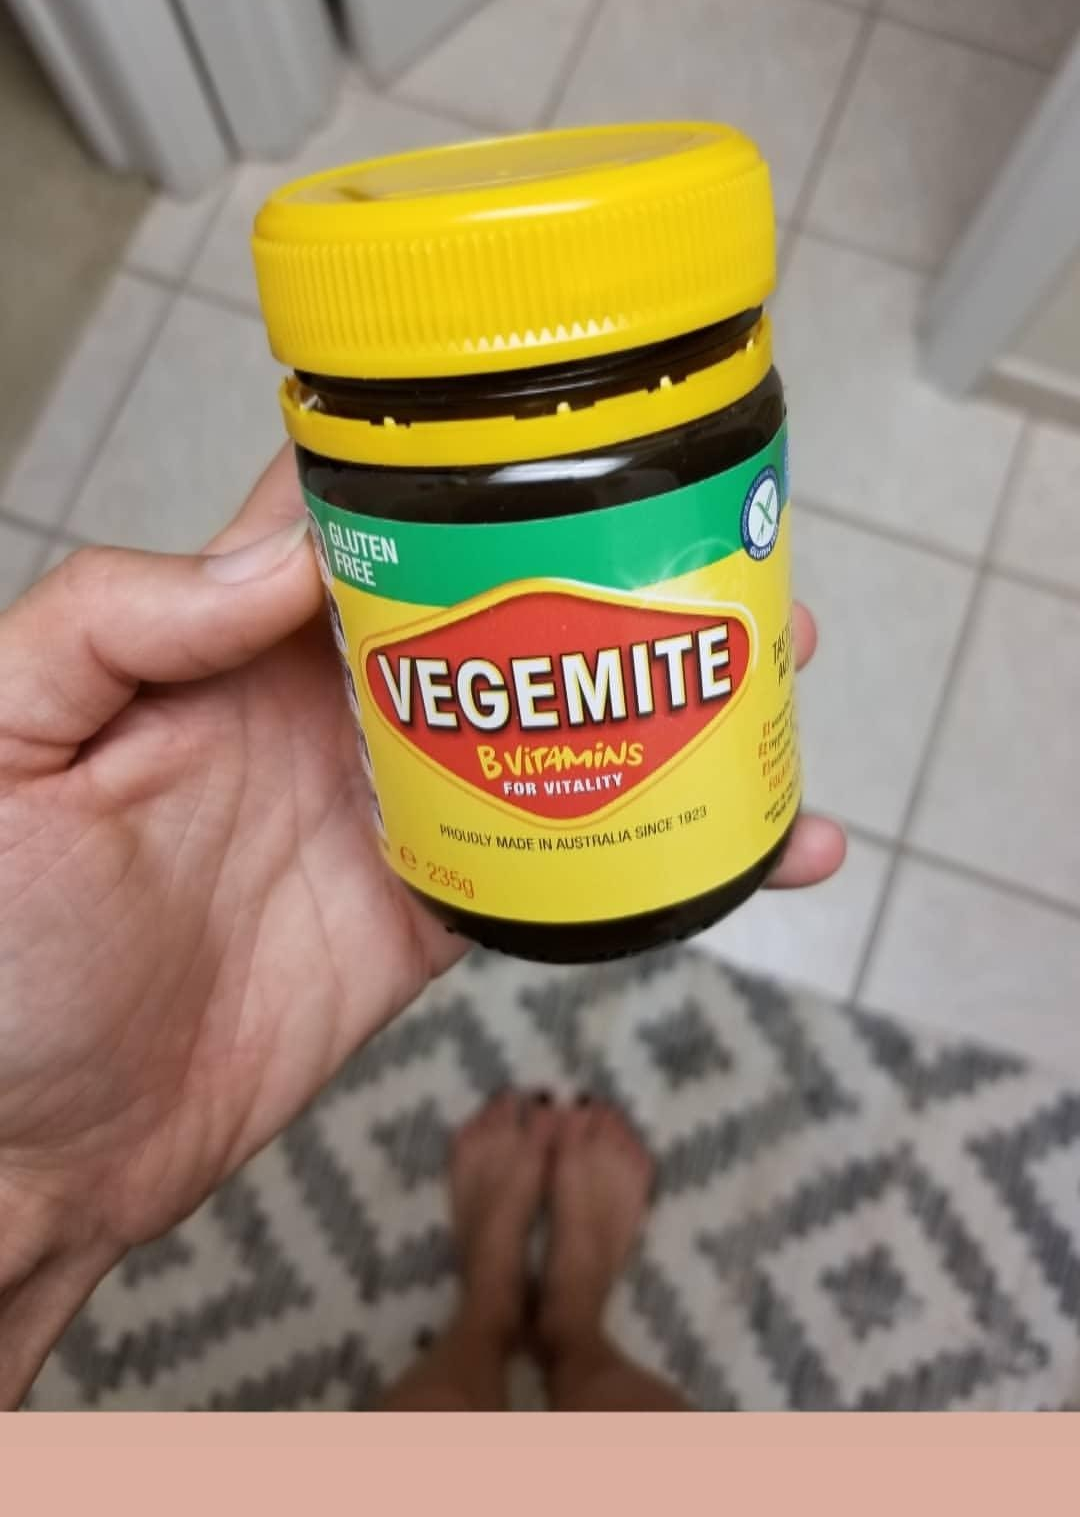 Hand holding a jar of Vegemite